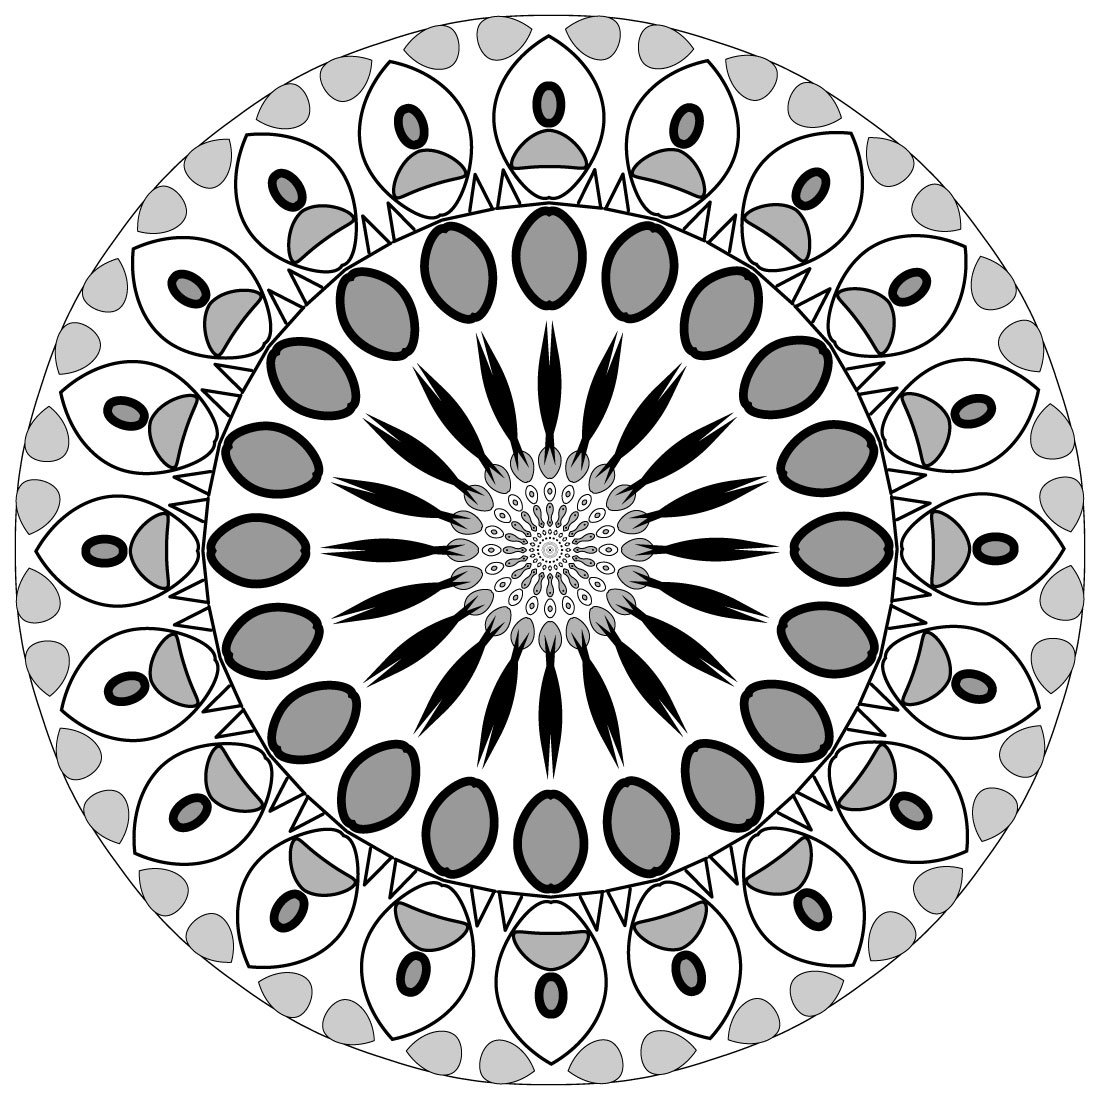 Mandala art with black and gray Petals cover image.